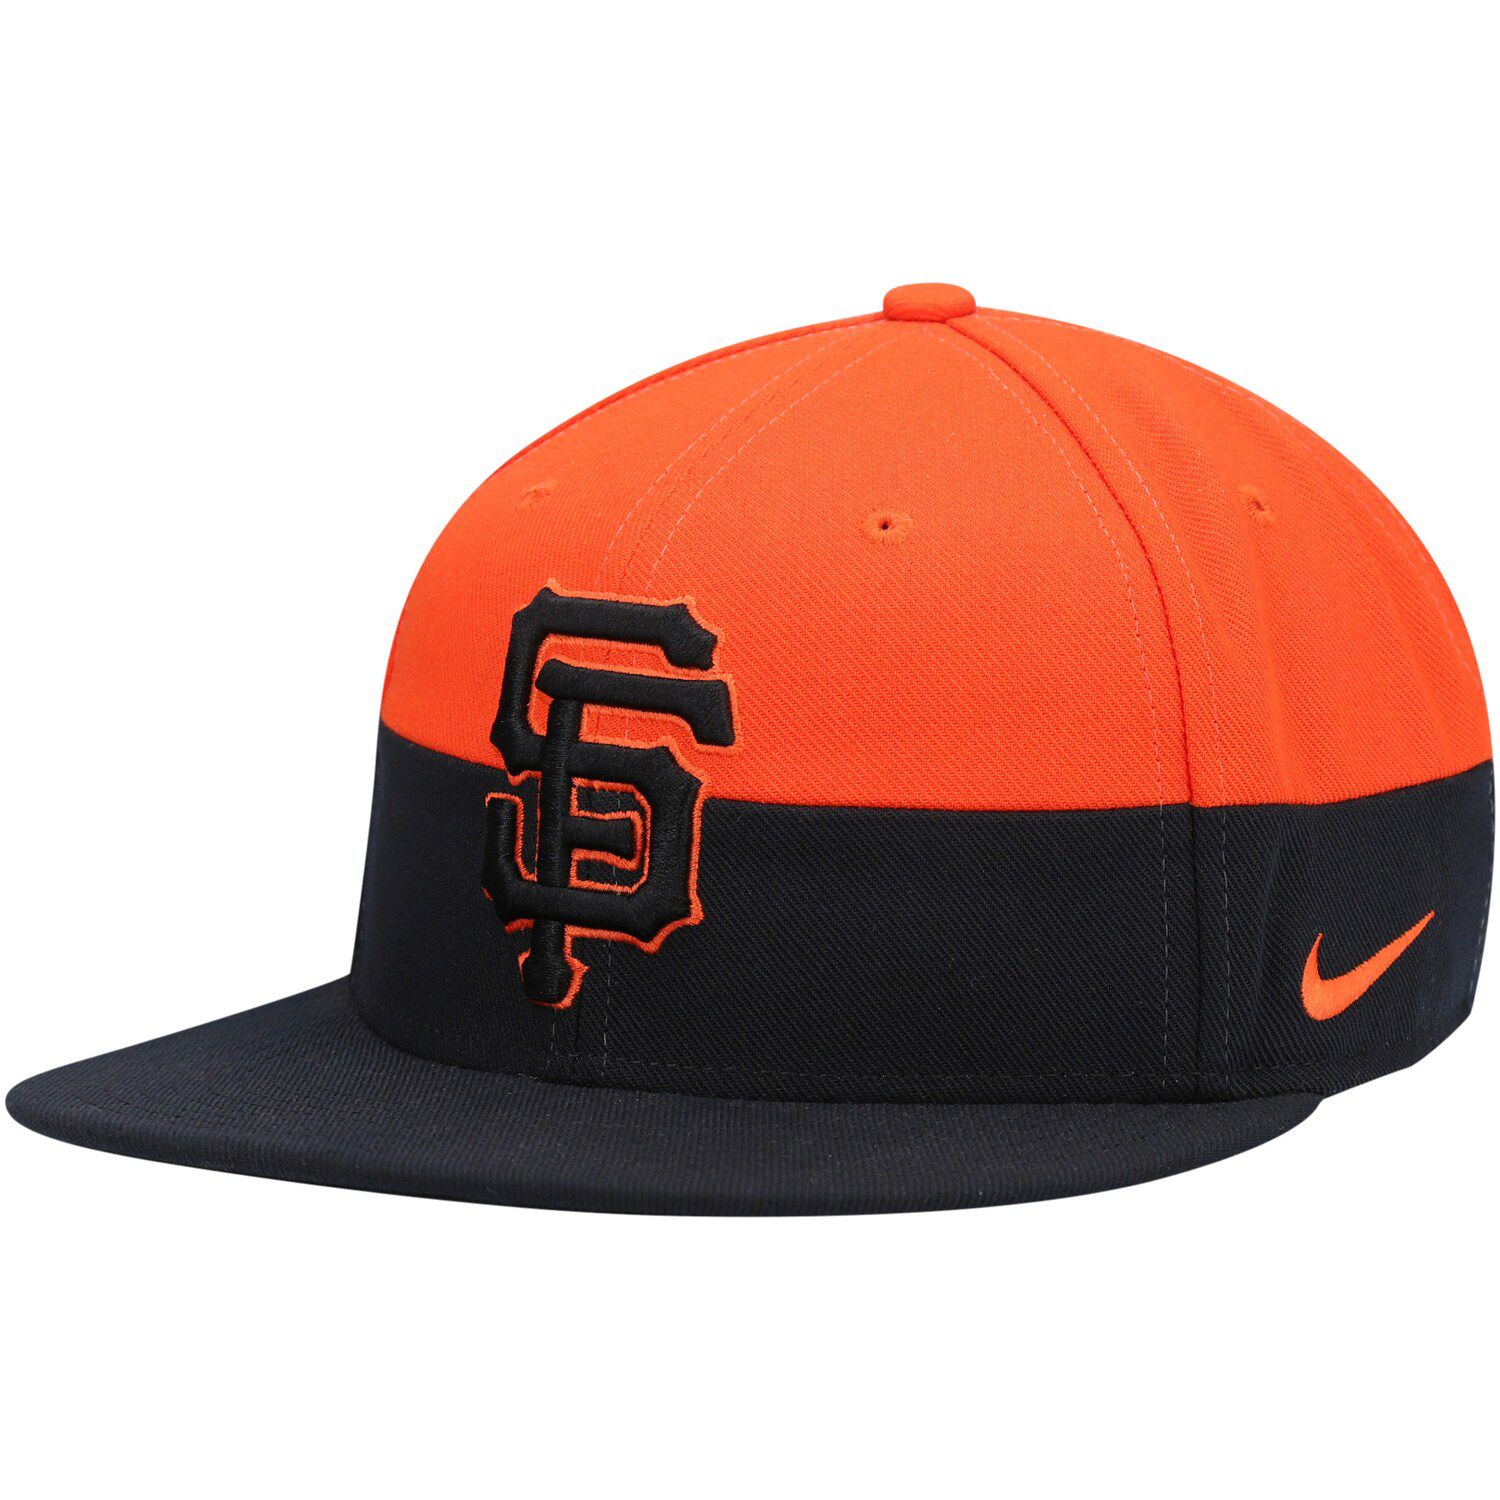 black and orange nike hat